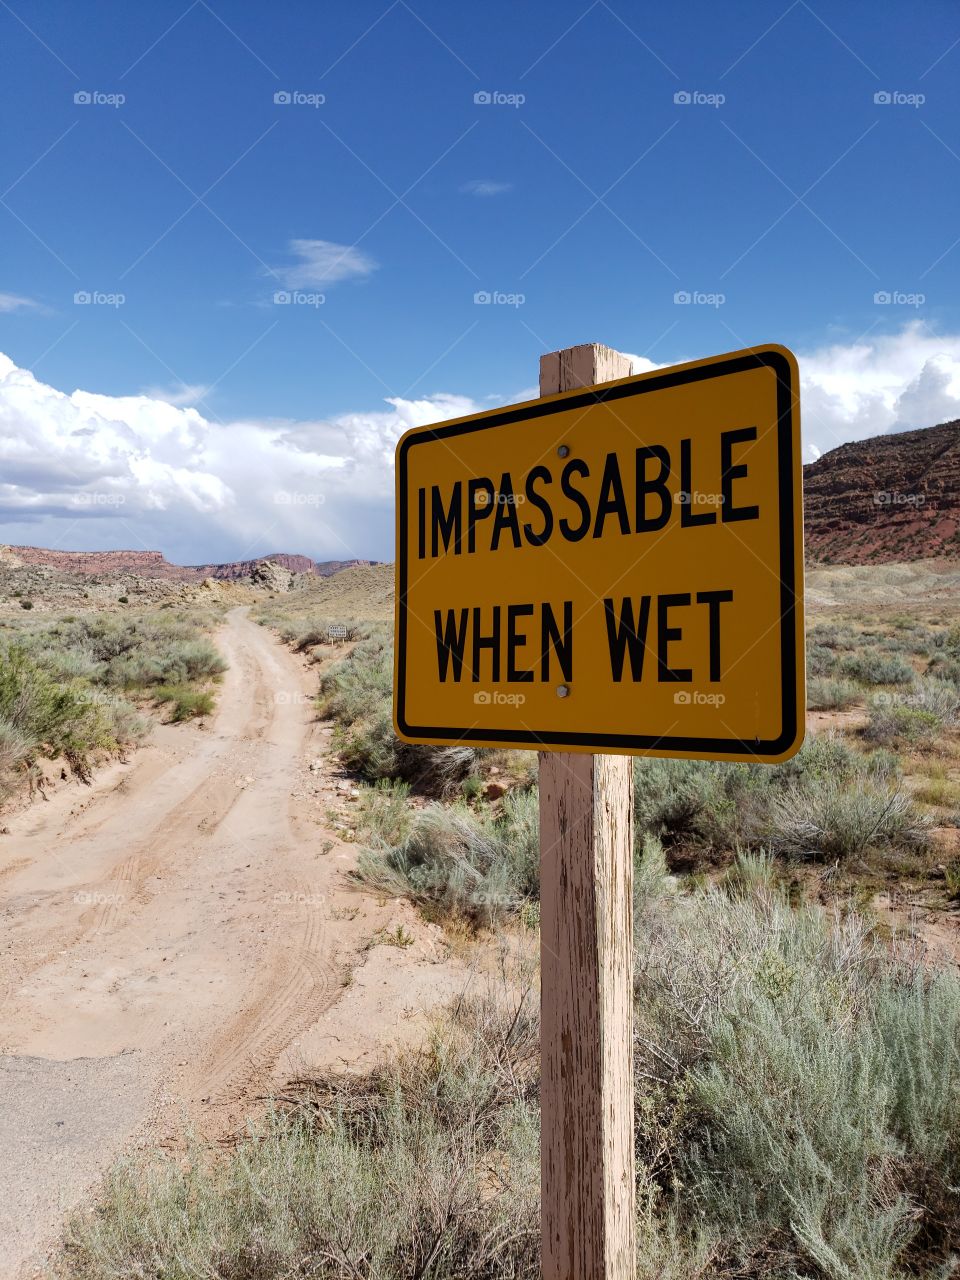 Impassable when wet